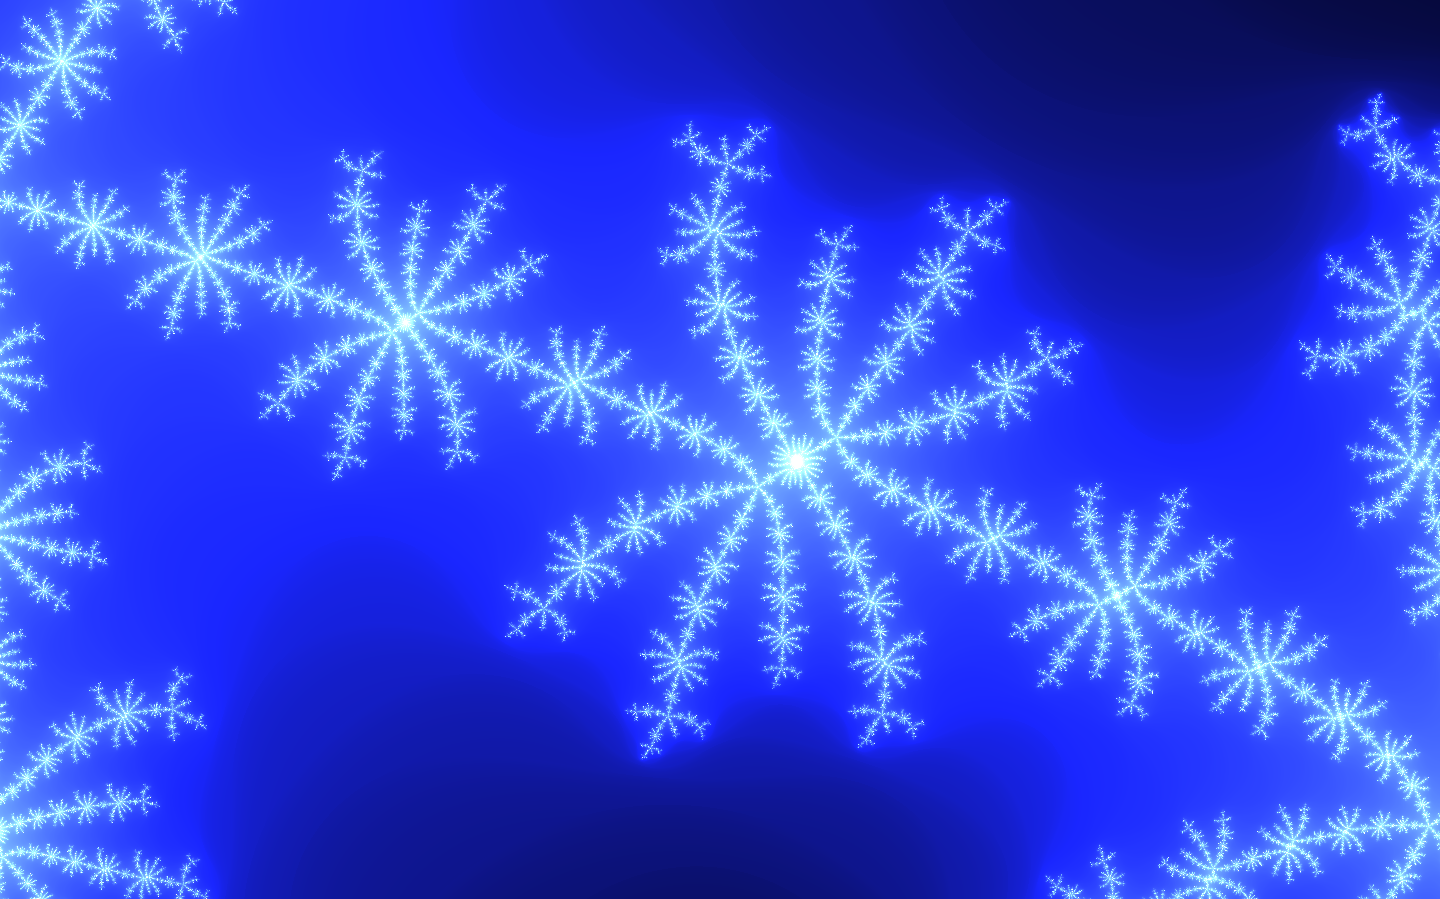 Mandelbrot Snowflake Image at (-0.56, -0.64)